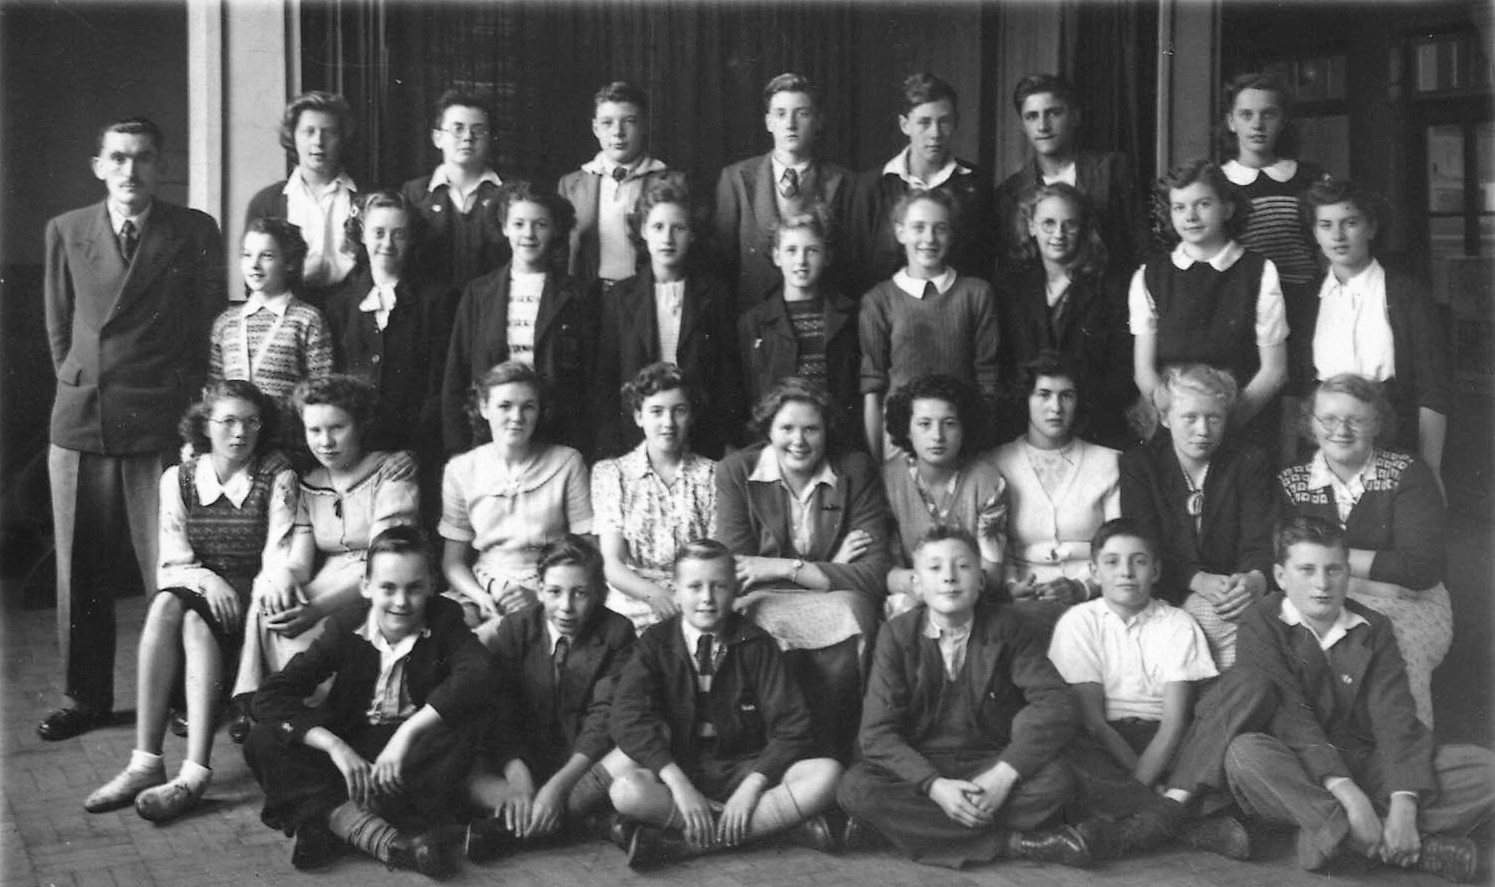 Markhouse Rd. School 1950